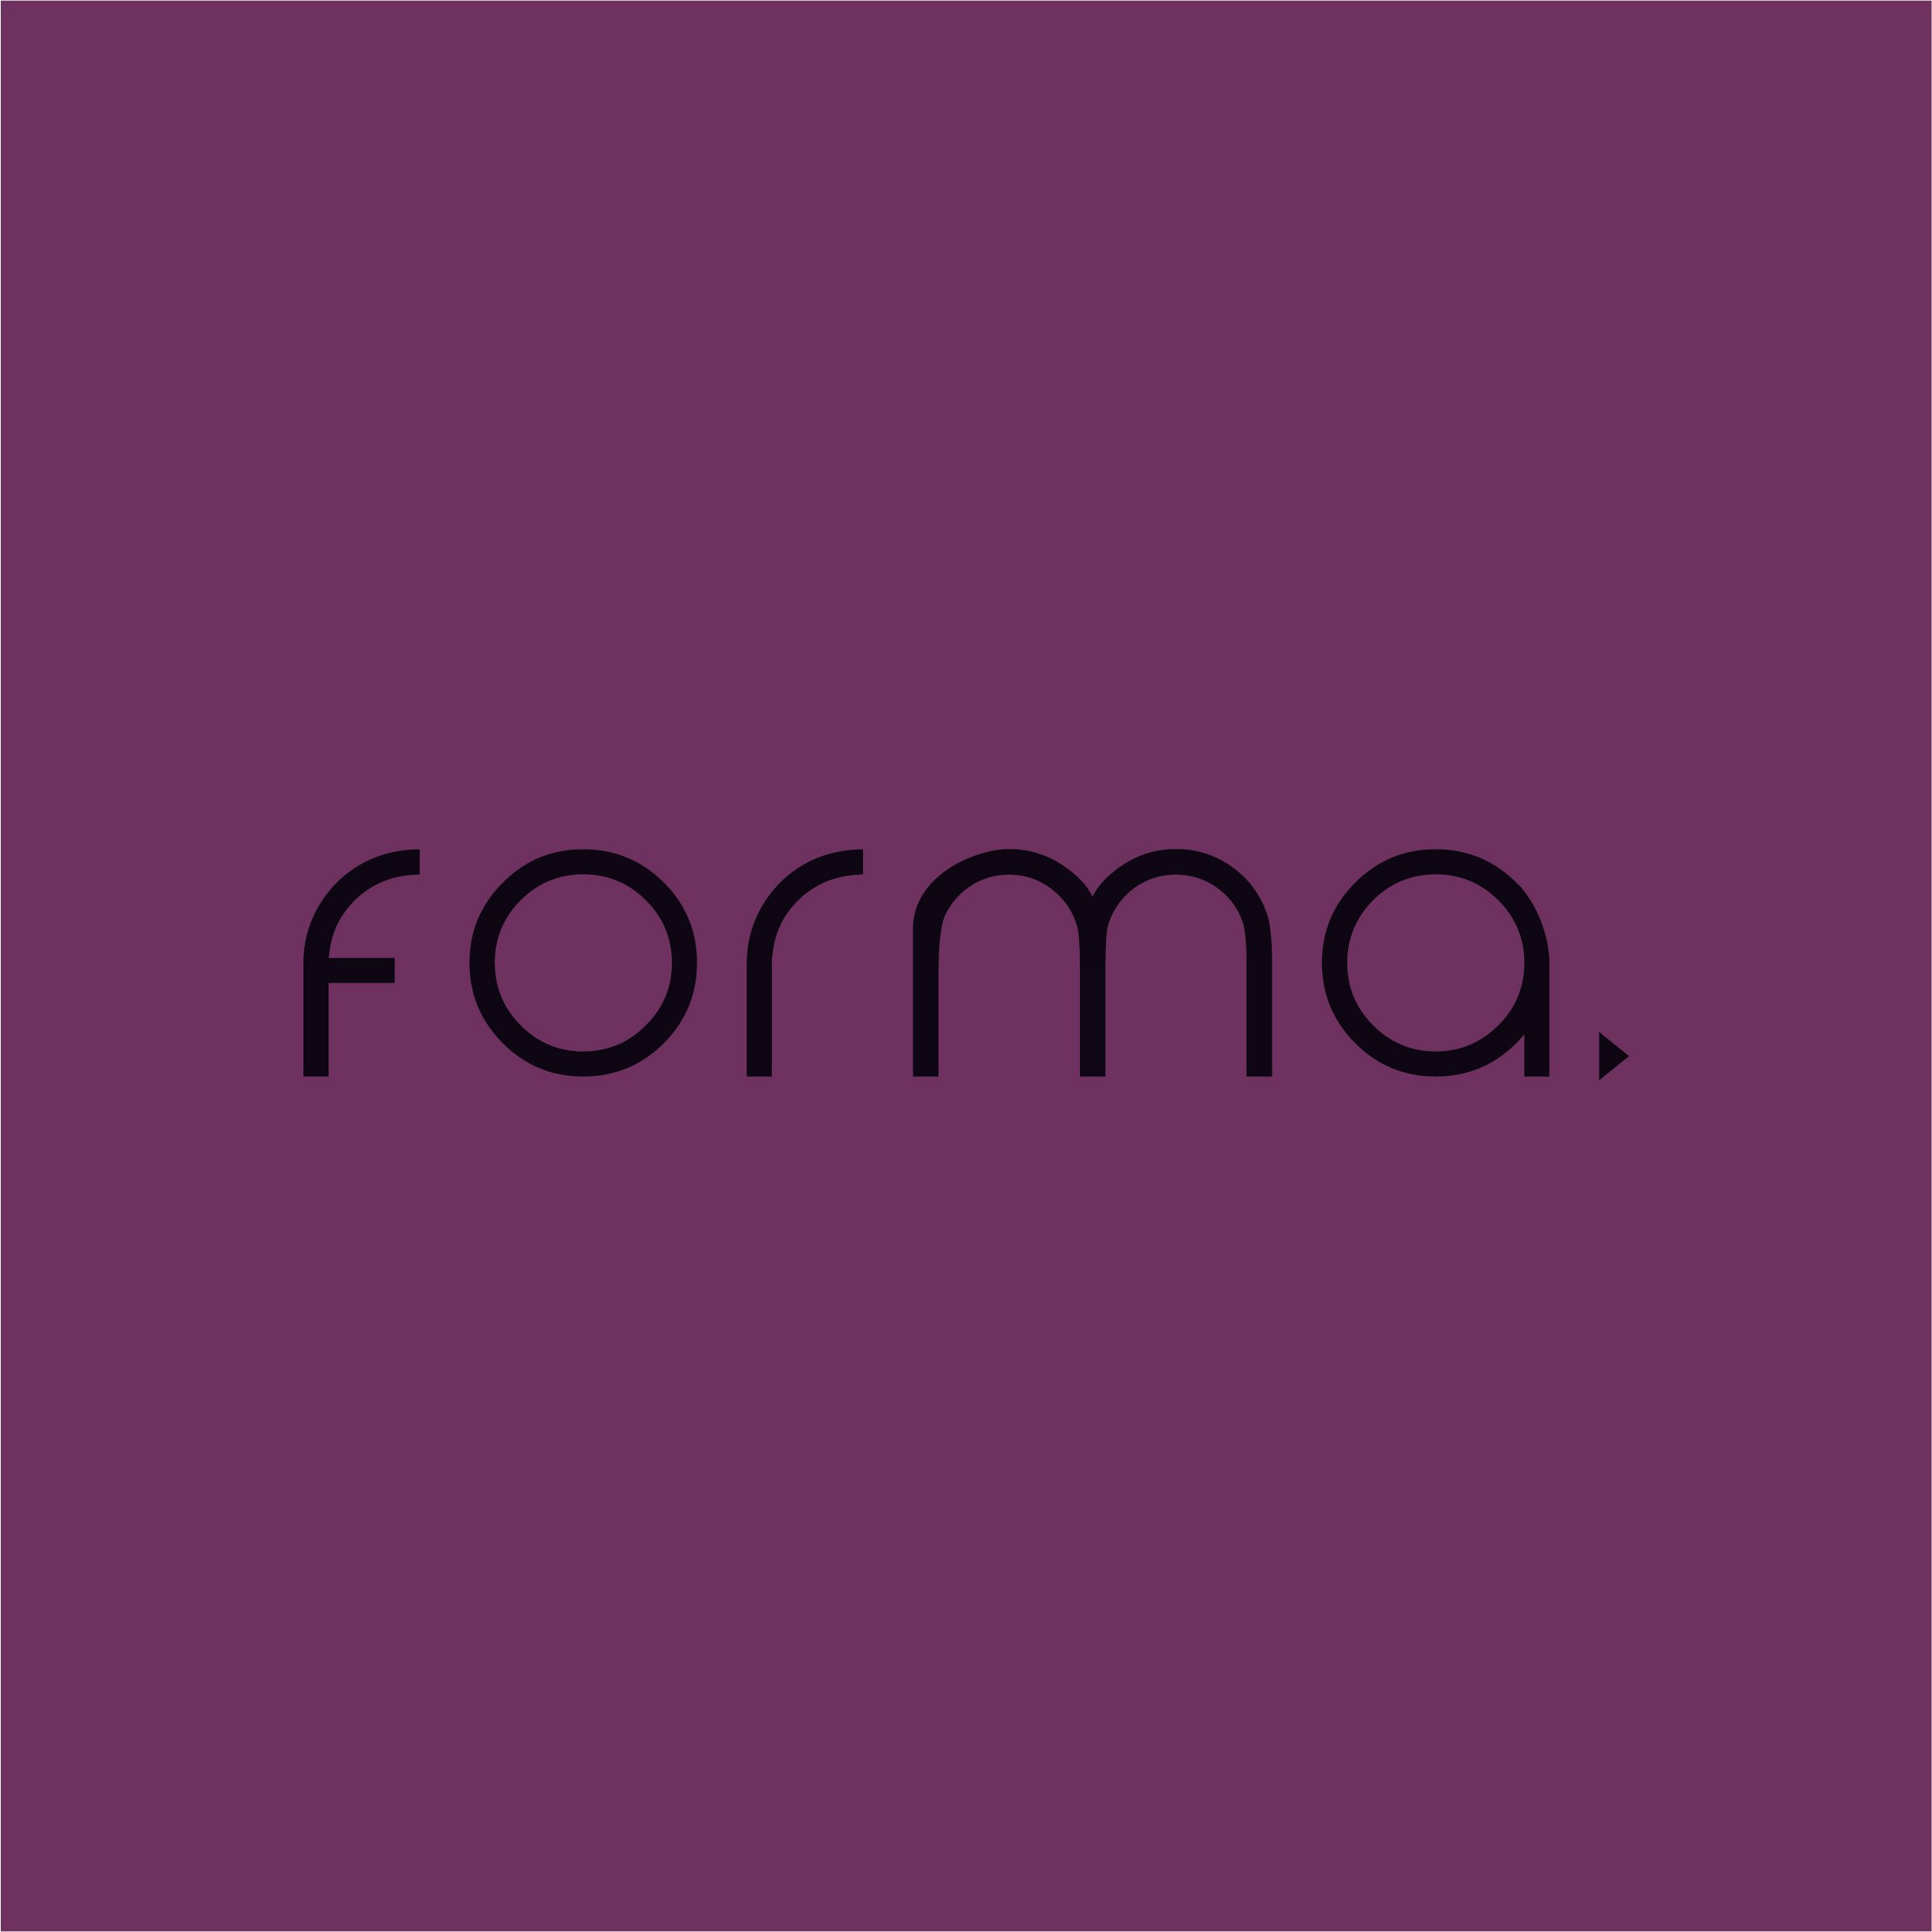 Forma_LinkedIn_Profile-01.jpg